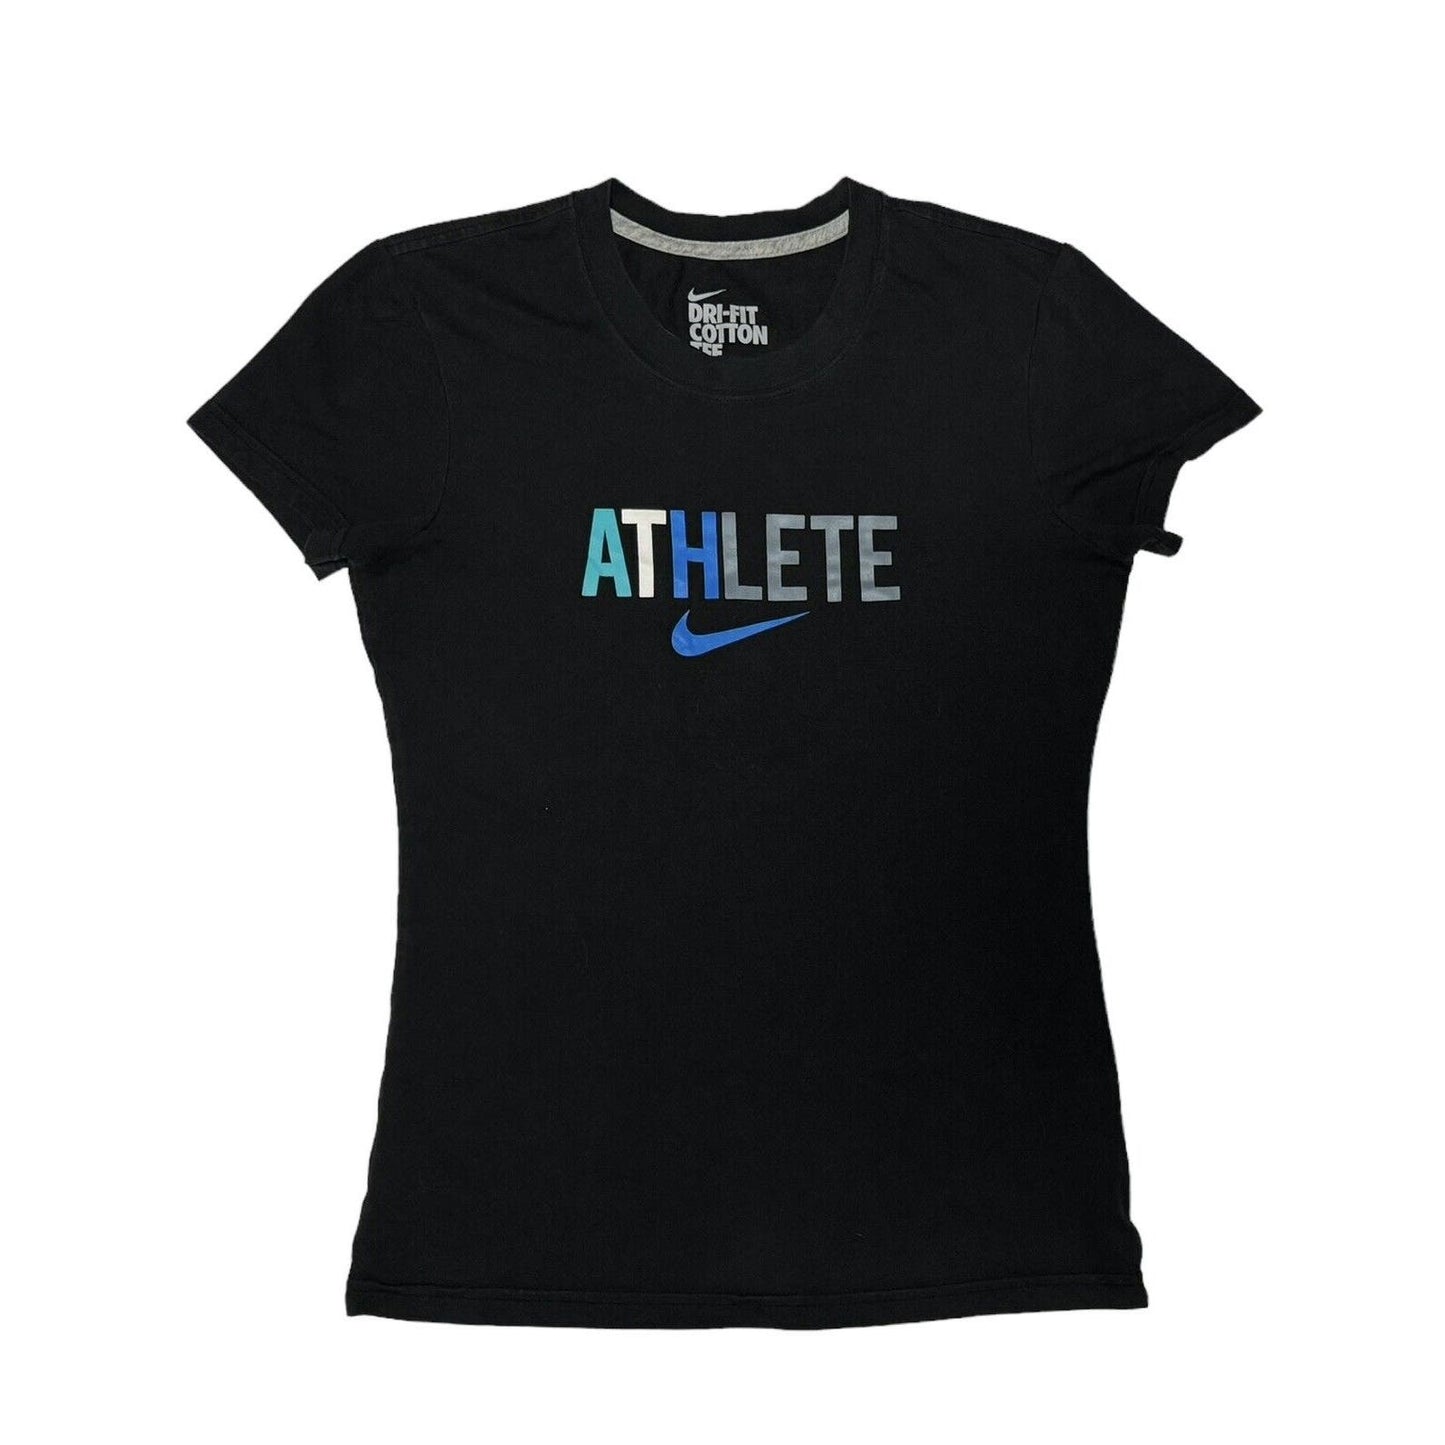 Nike Athlete Swoosh Logo Dri Fit Cotton Tee Shirt Small Black